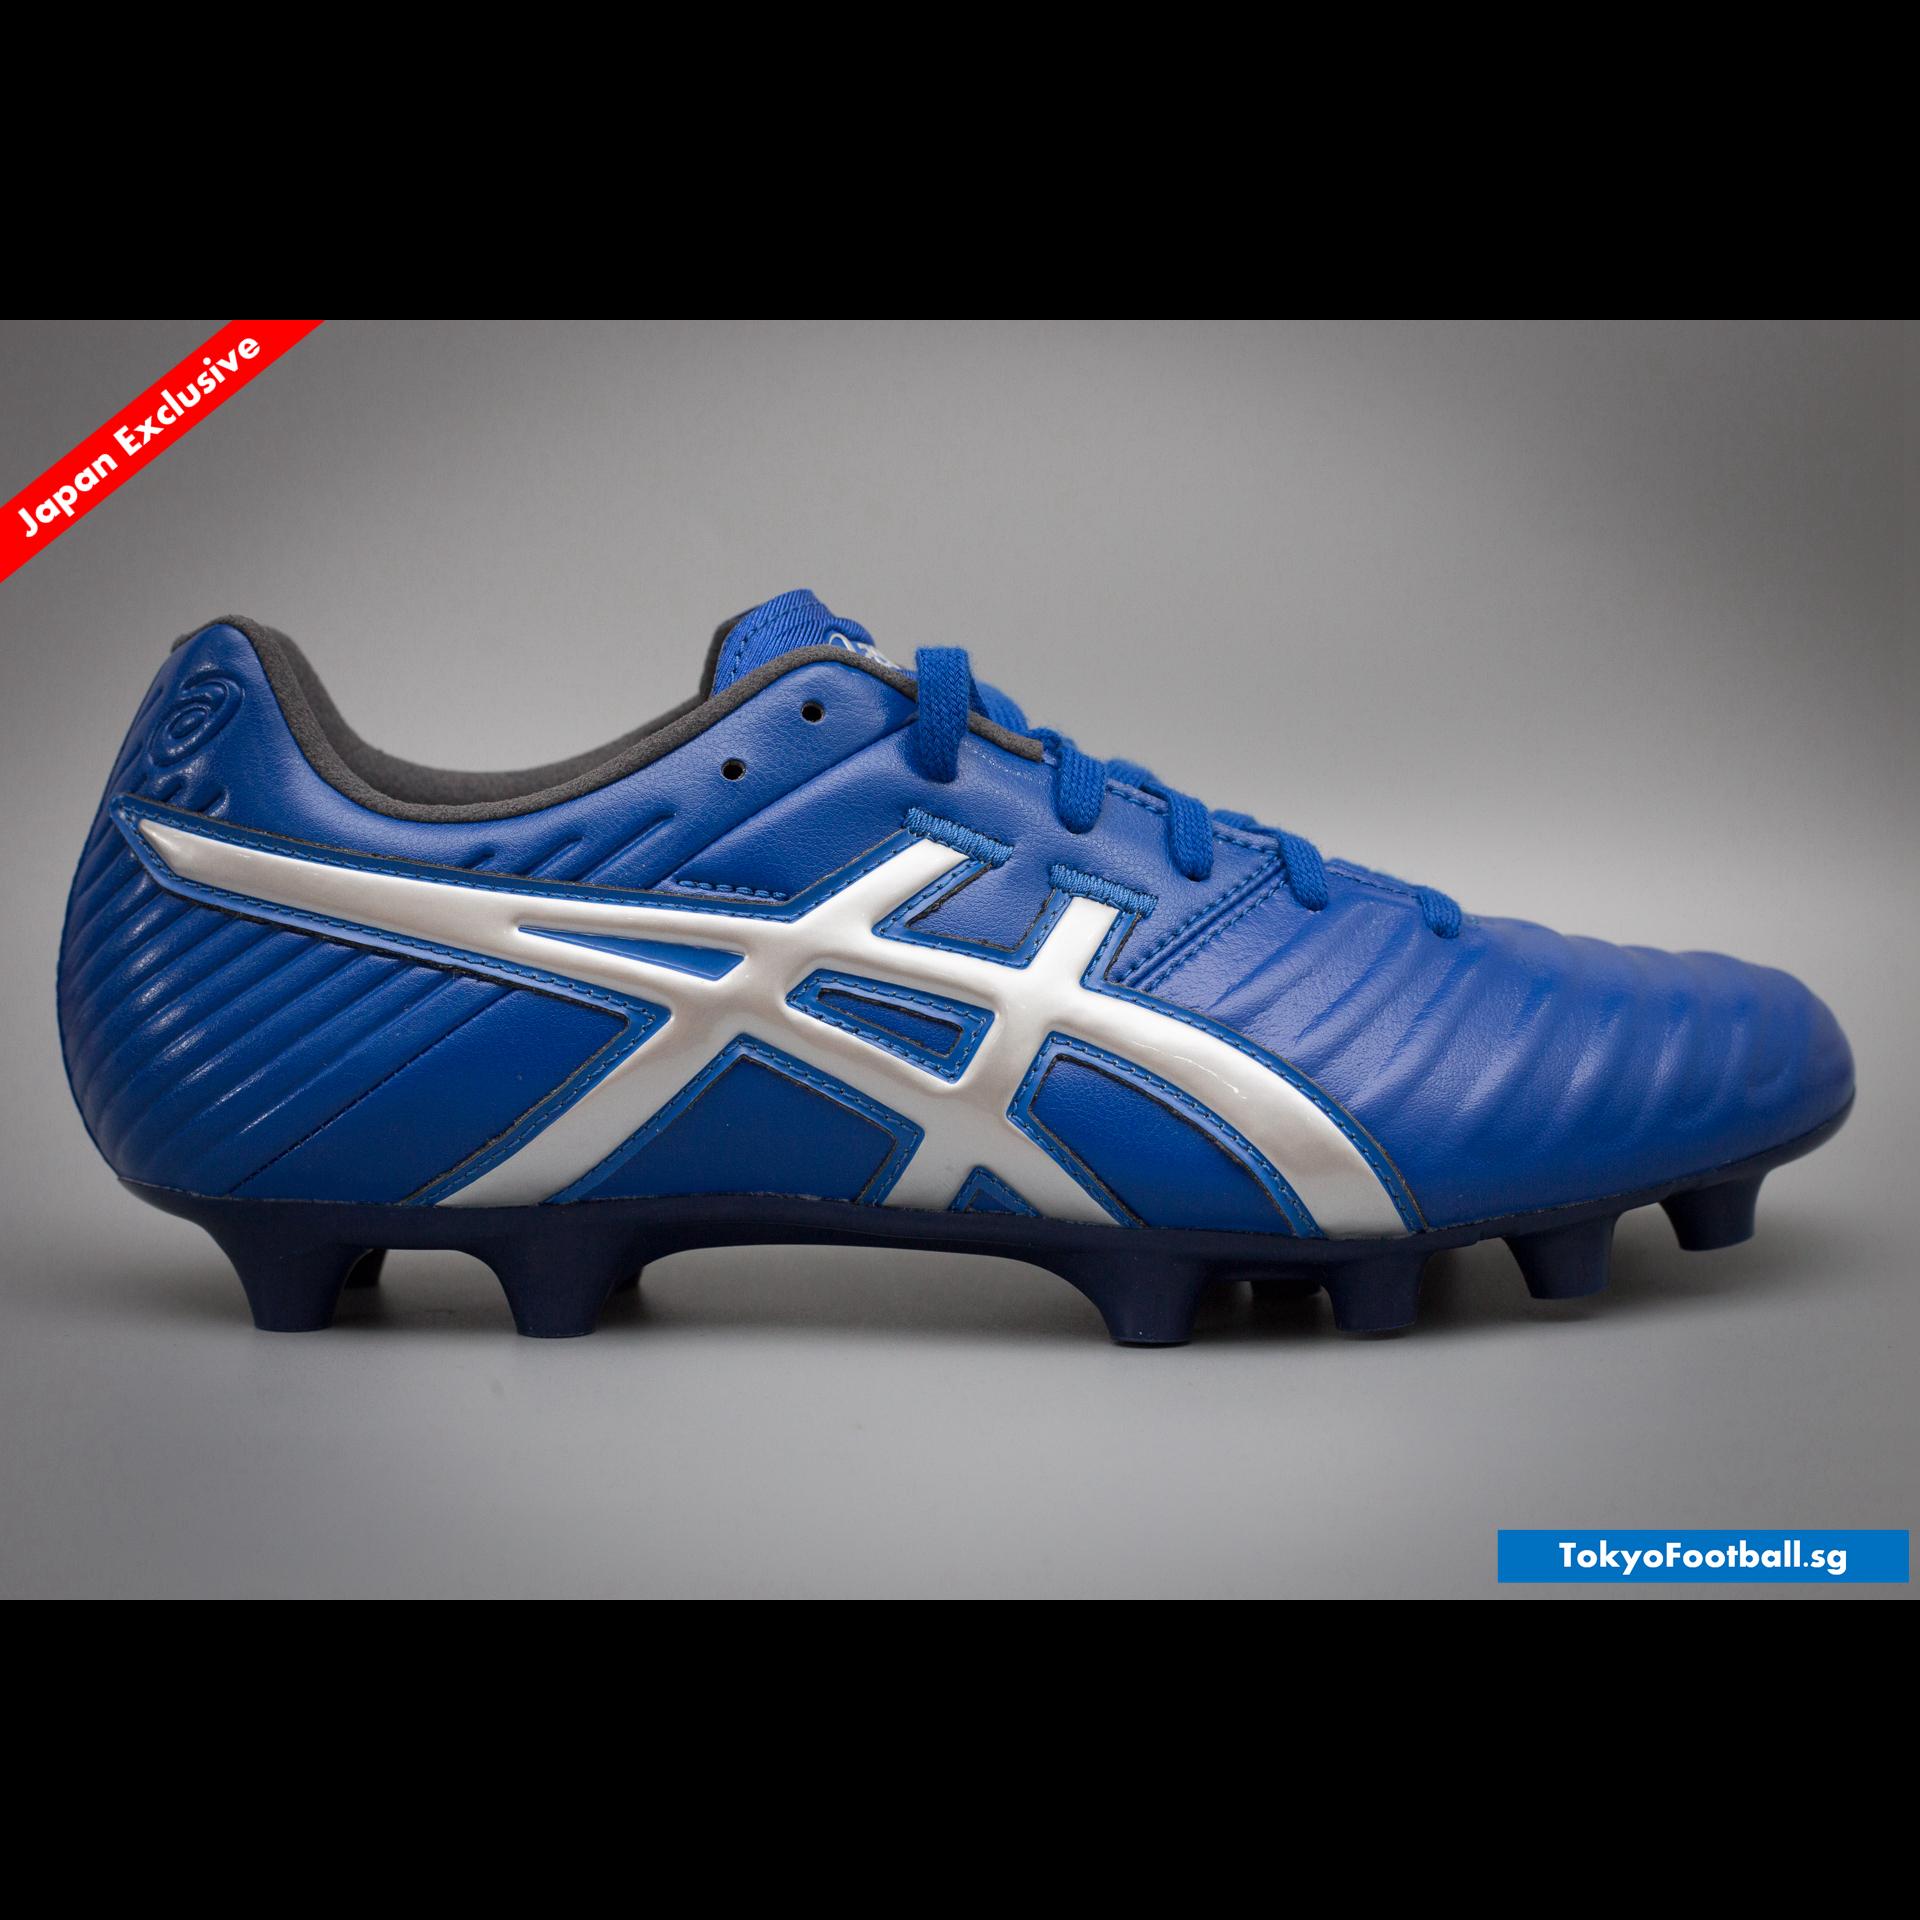 buy asics football boots online